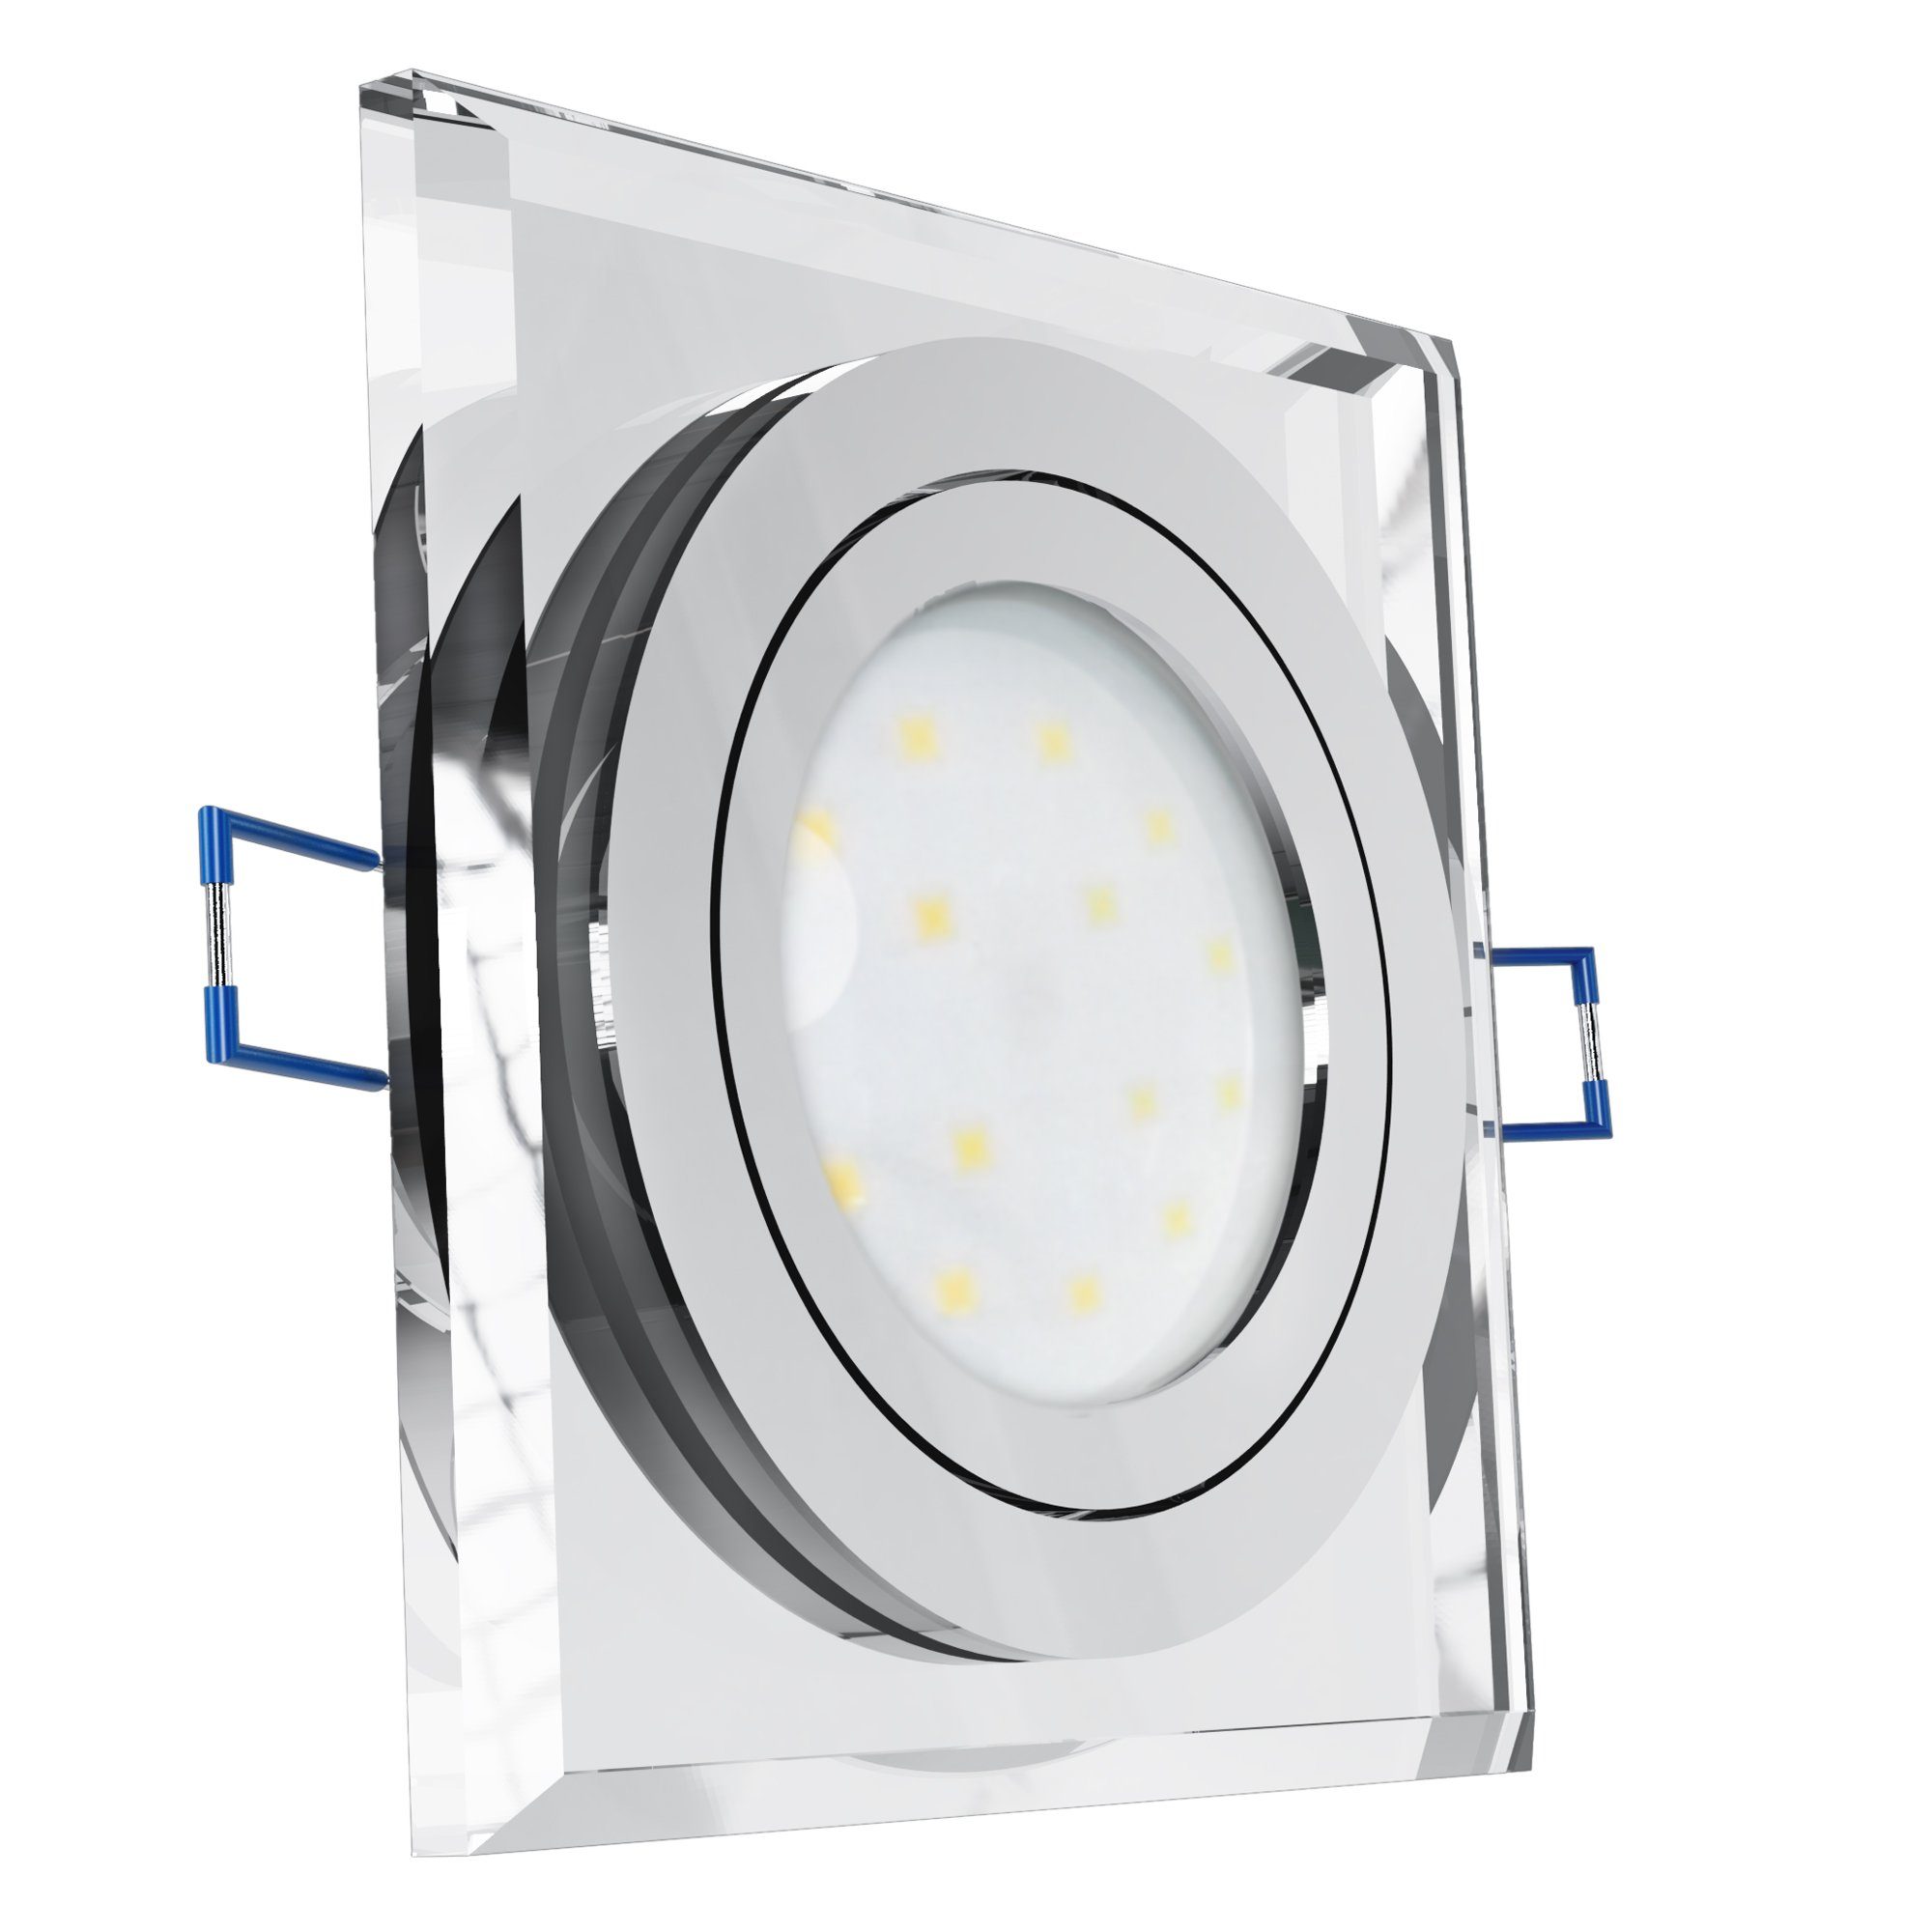 SSC-LUXon LED LED Modul Glas klar eckig Einbaustrahler Schwenkbarer flach dimmbar, Einbauspot Neutralweiß LED